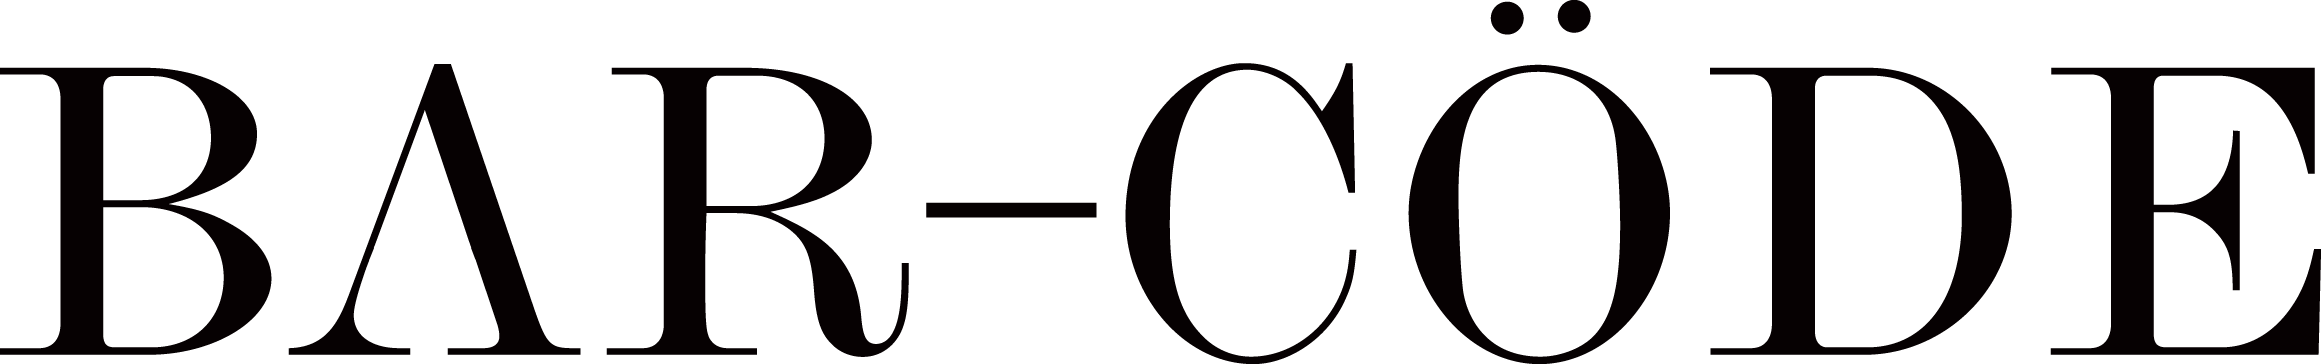 Barcode Washington, Dc - Barcode Dc Logo (2321x364)